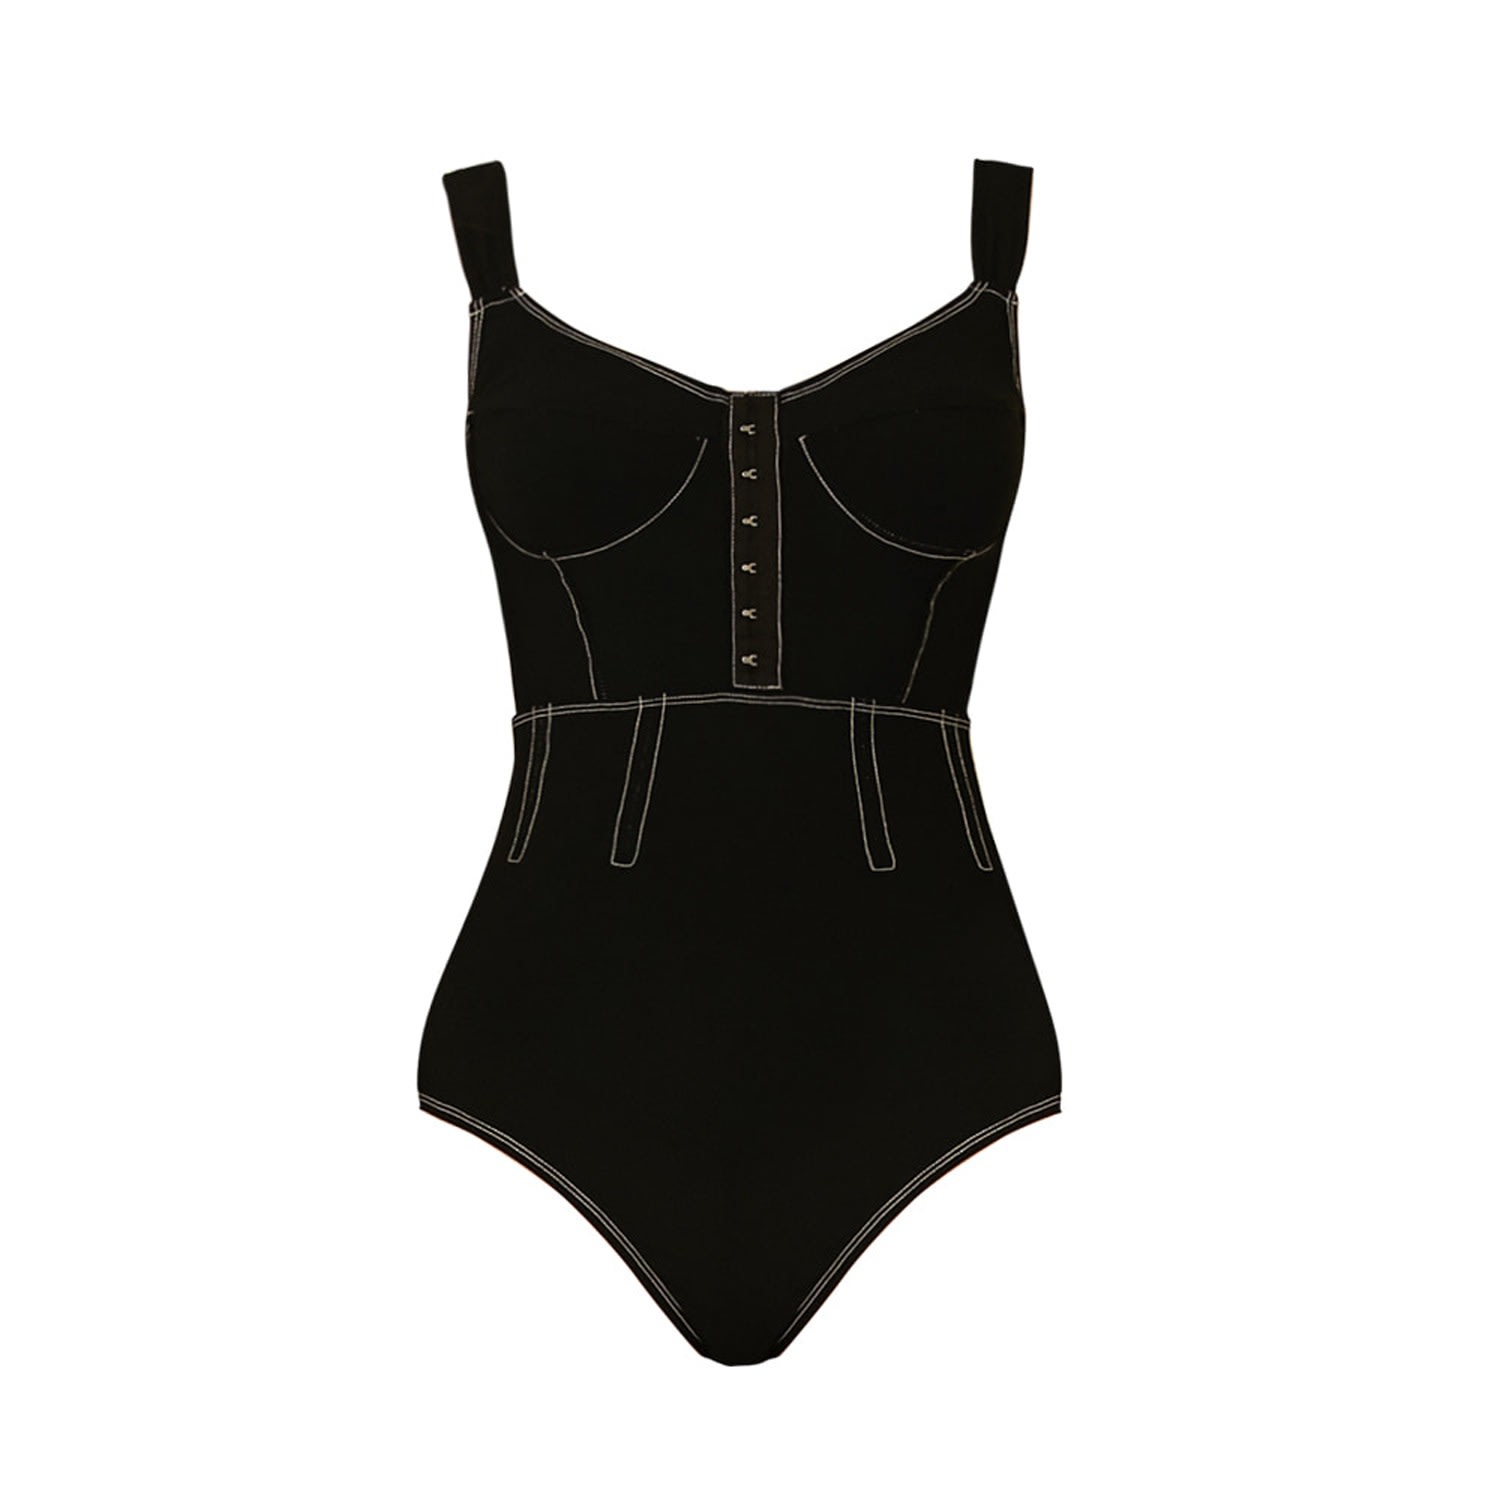 Women's Bustier Style One Piece Swimwear - Black Extra Small QUA VINO